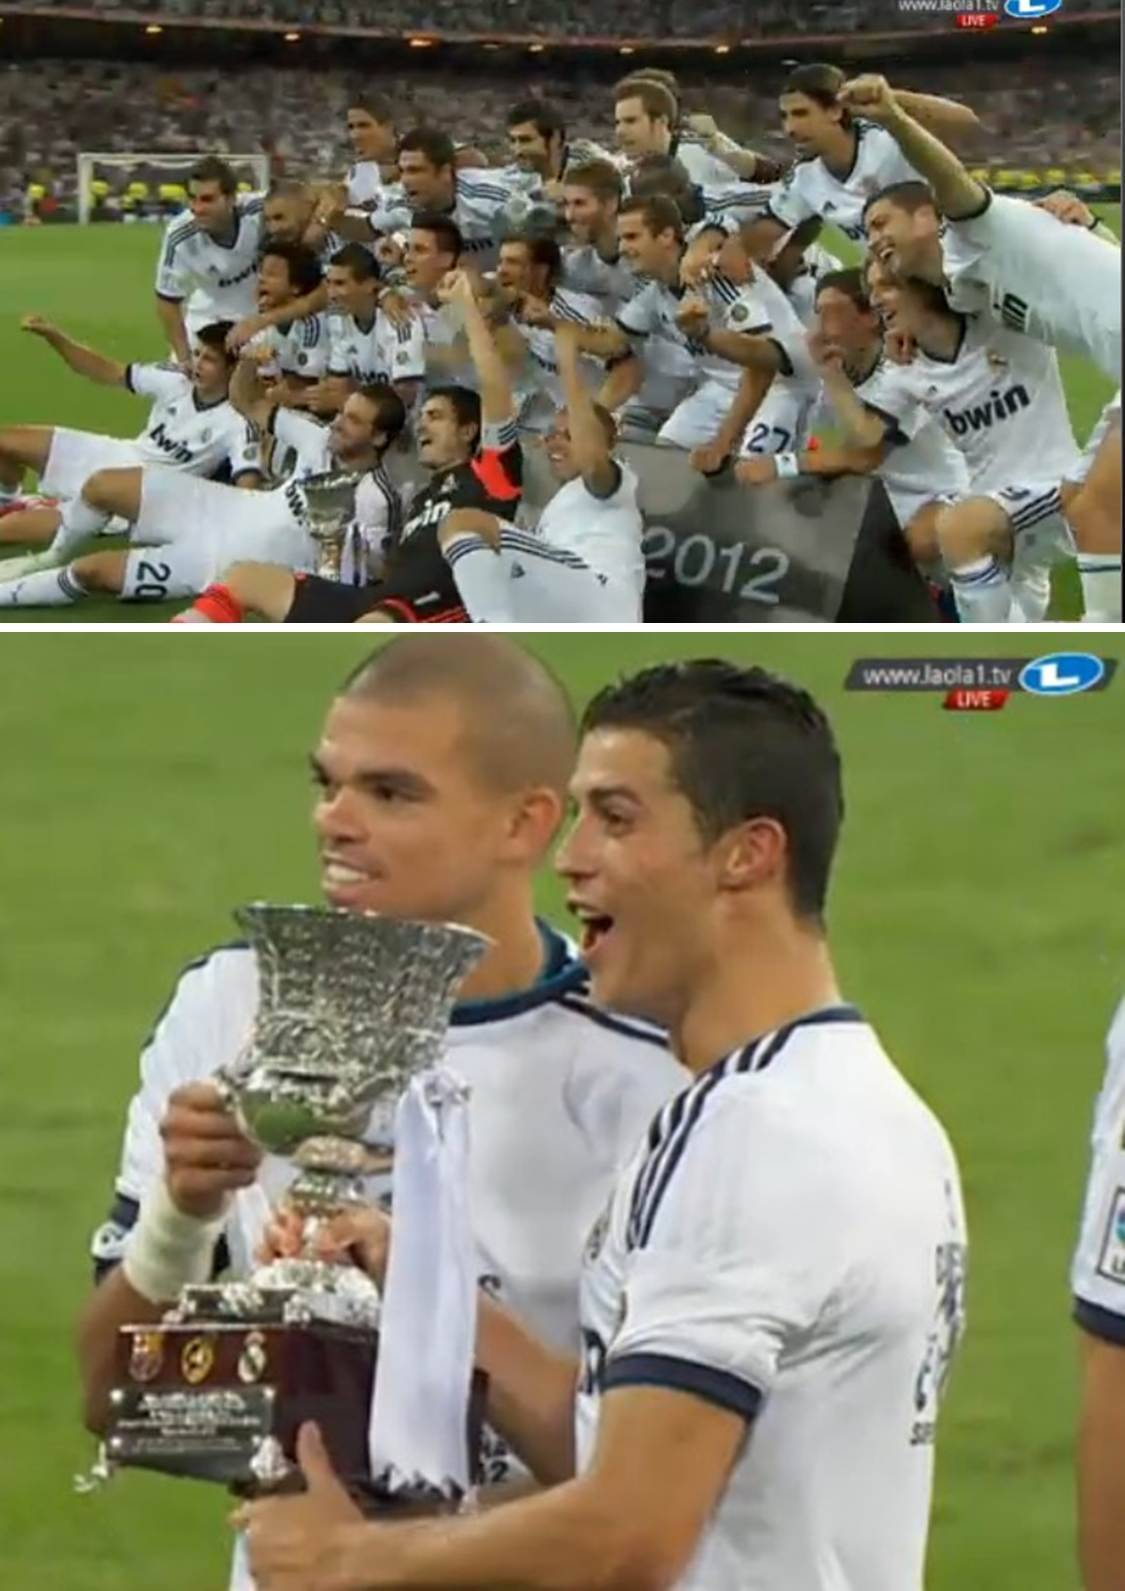 ♫ We are the Champions &#8230; ♫
Supercopa Real Madrid vs. FC Barcelona 2:1, 29.08.2012 (11&#8217; Gonzalo Higuaín, 19&#8217; Cristiano Ronaldo, 45&#8217; Messi)